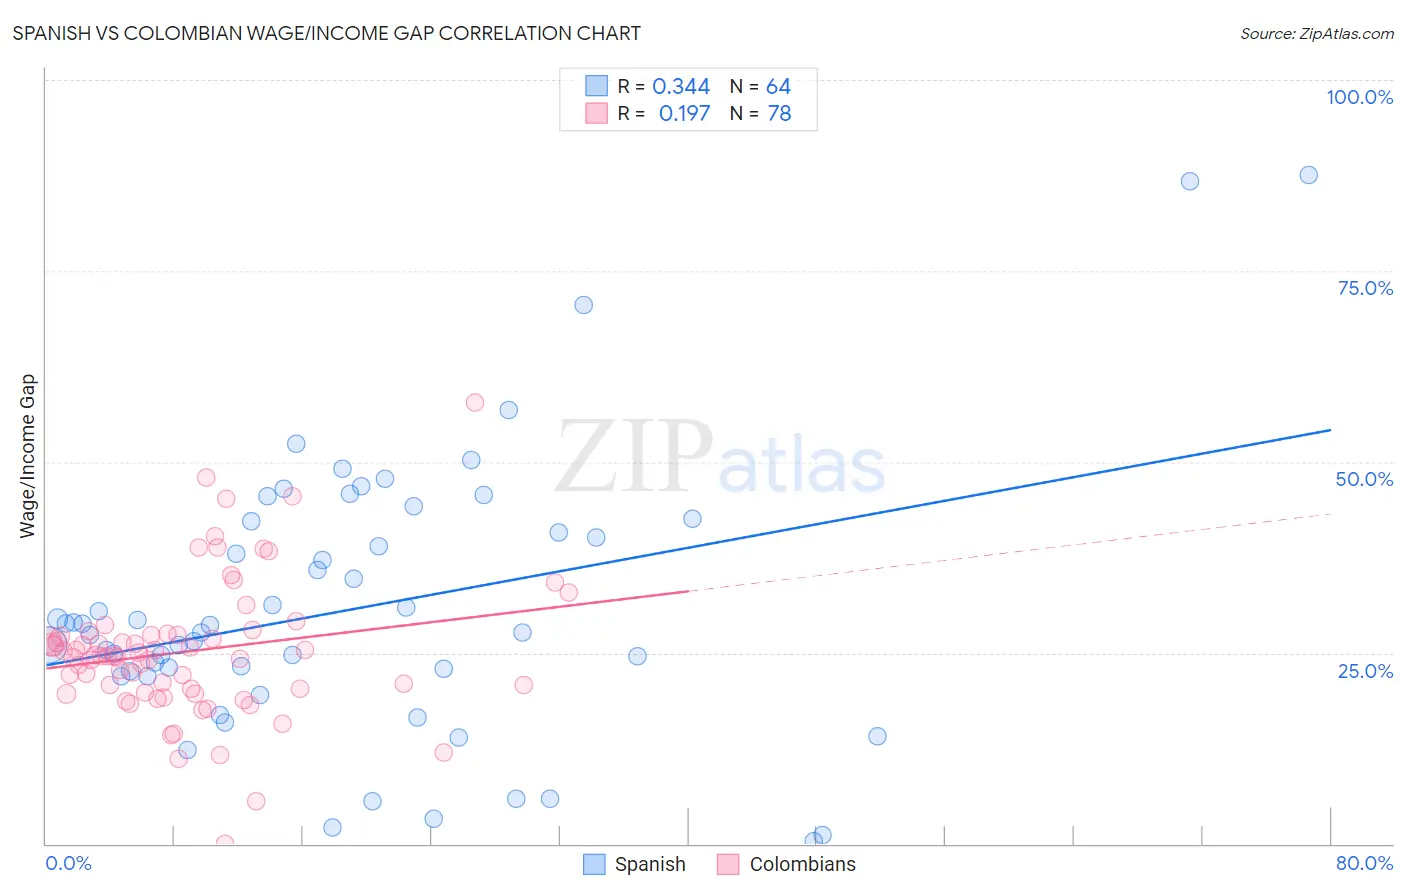 Spanish vs Colombian Wage/Income Gap